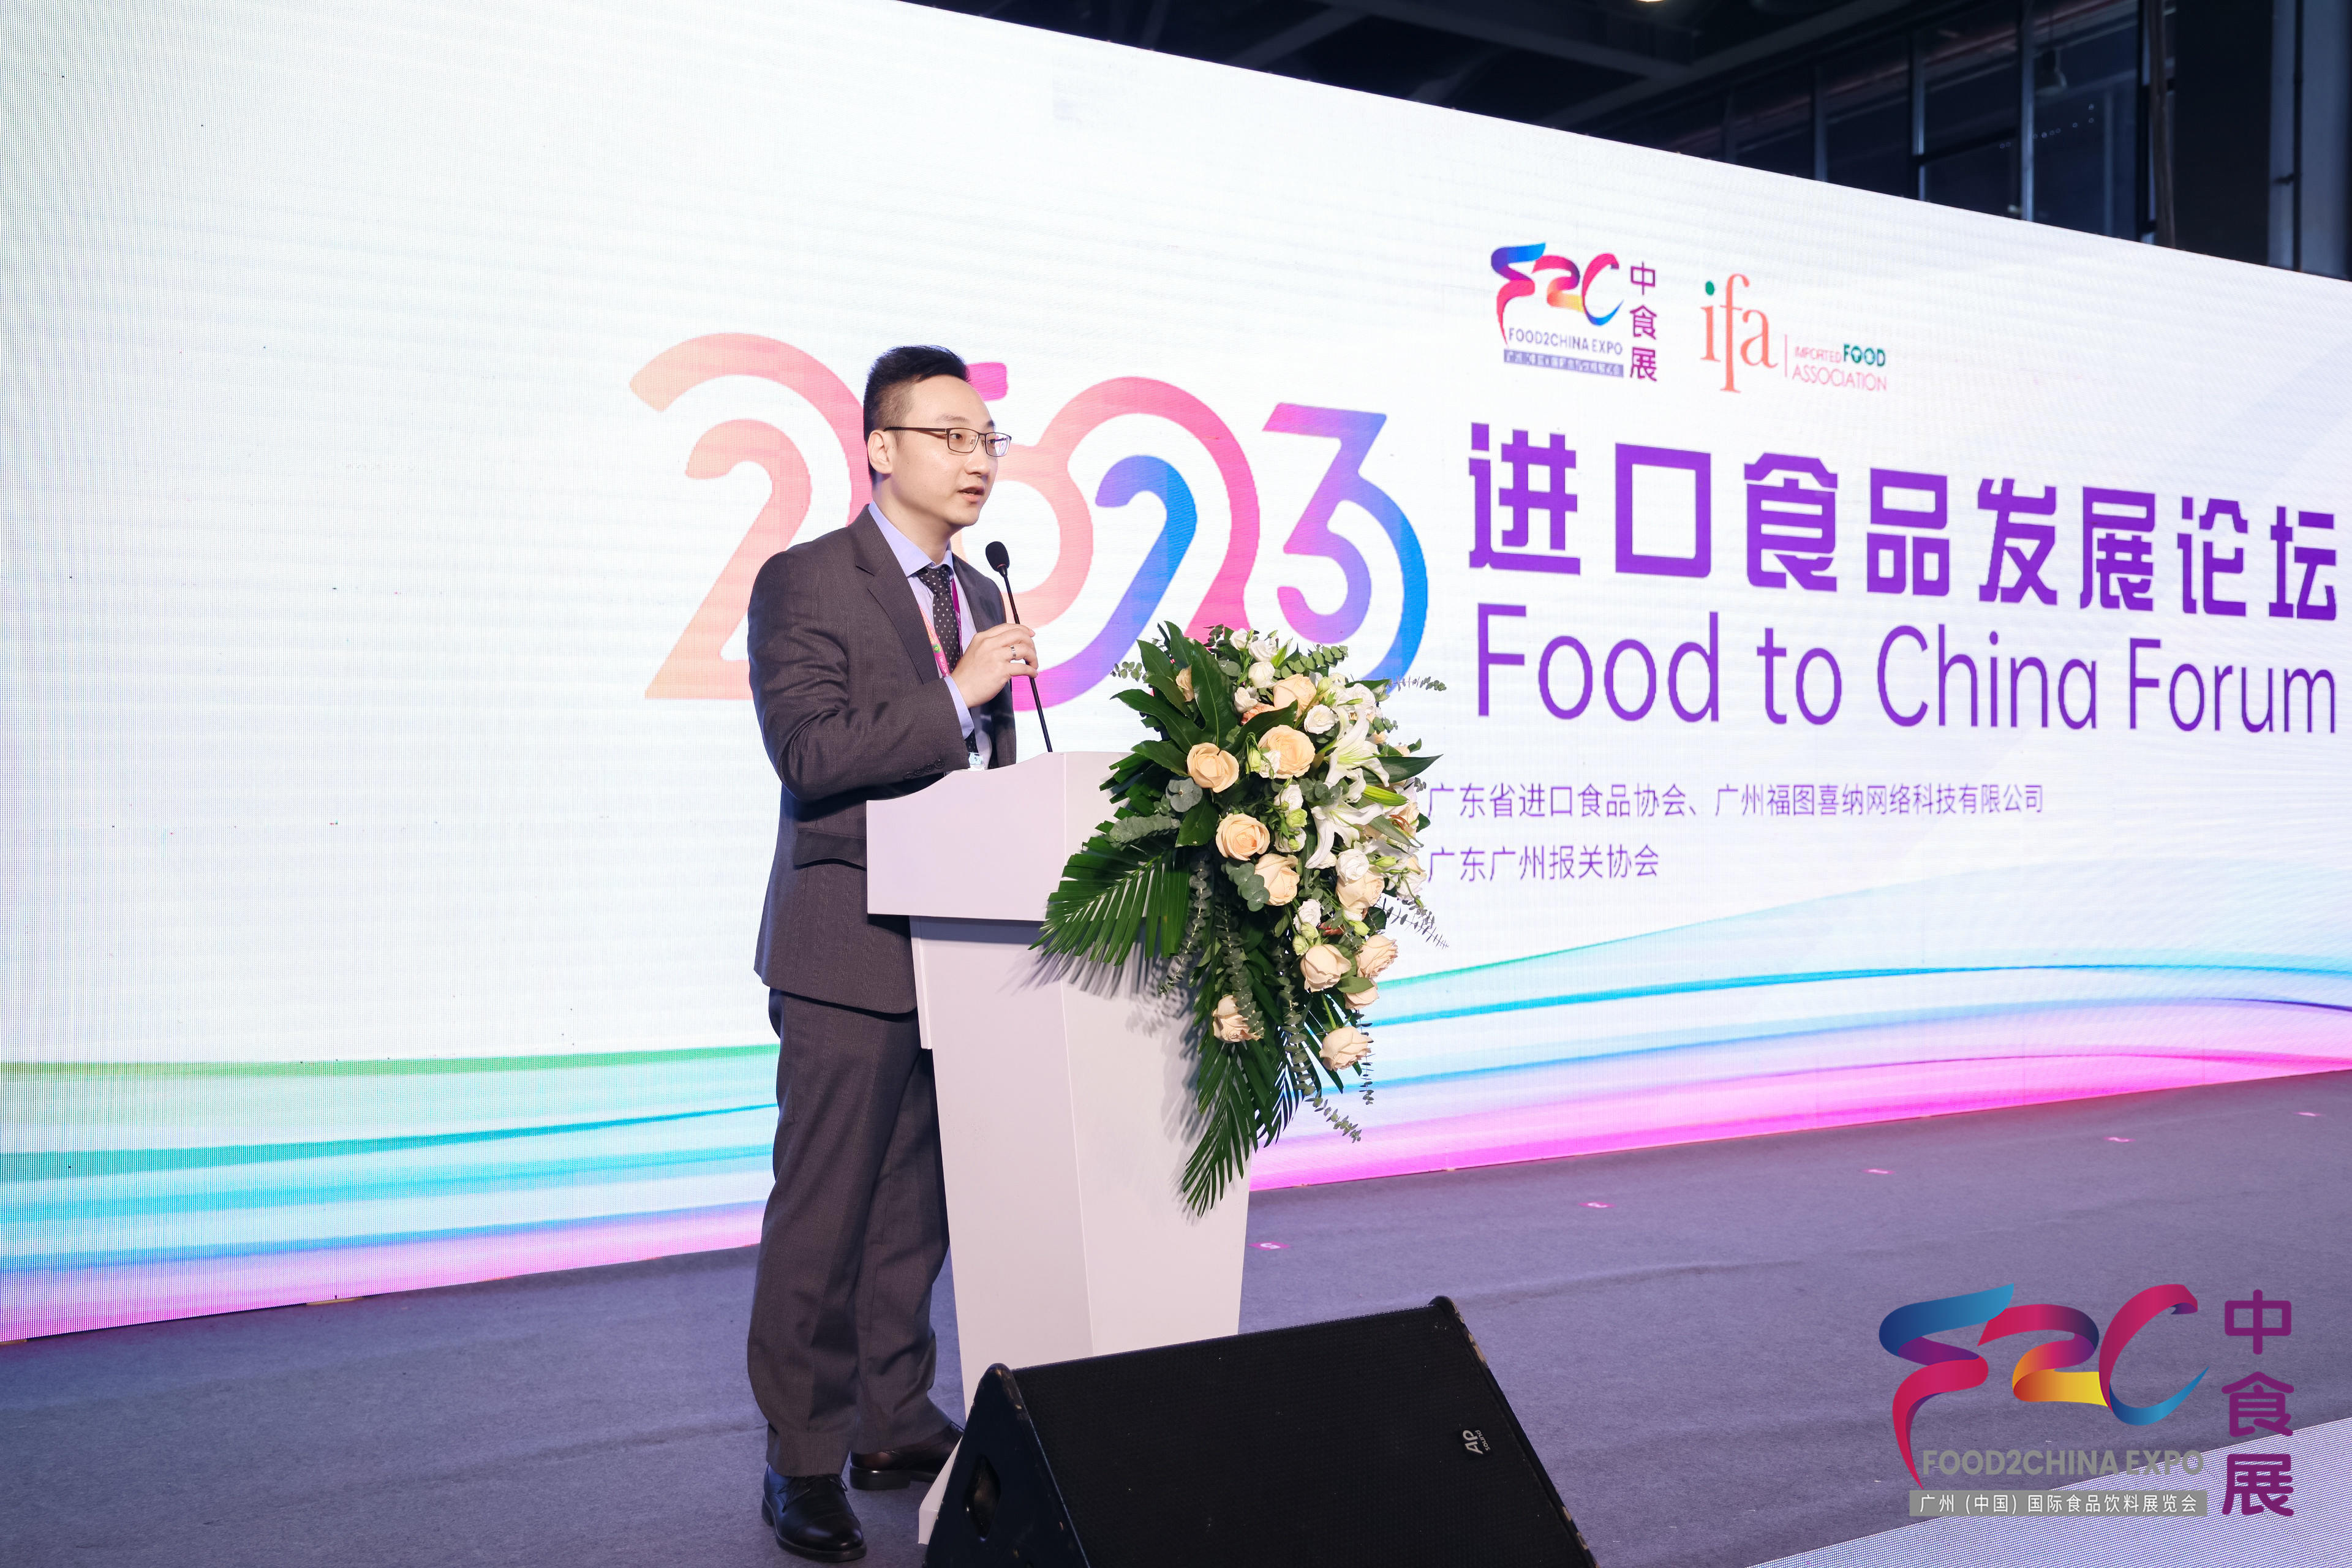 2023 Food to China Forum